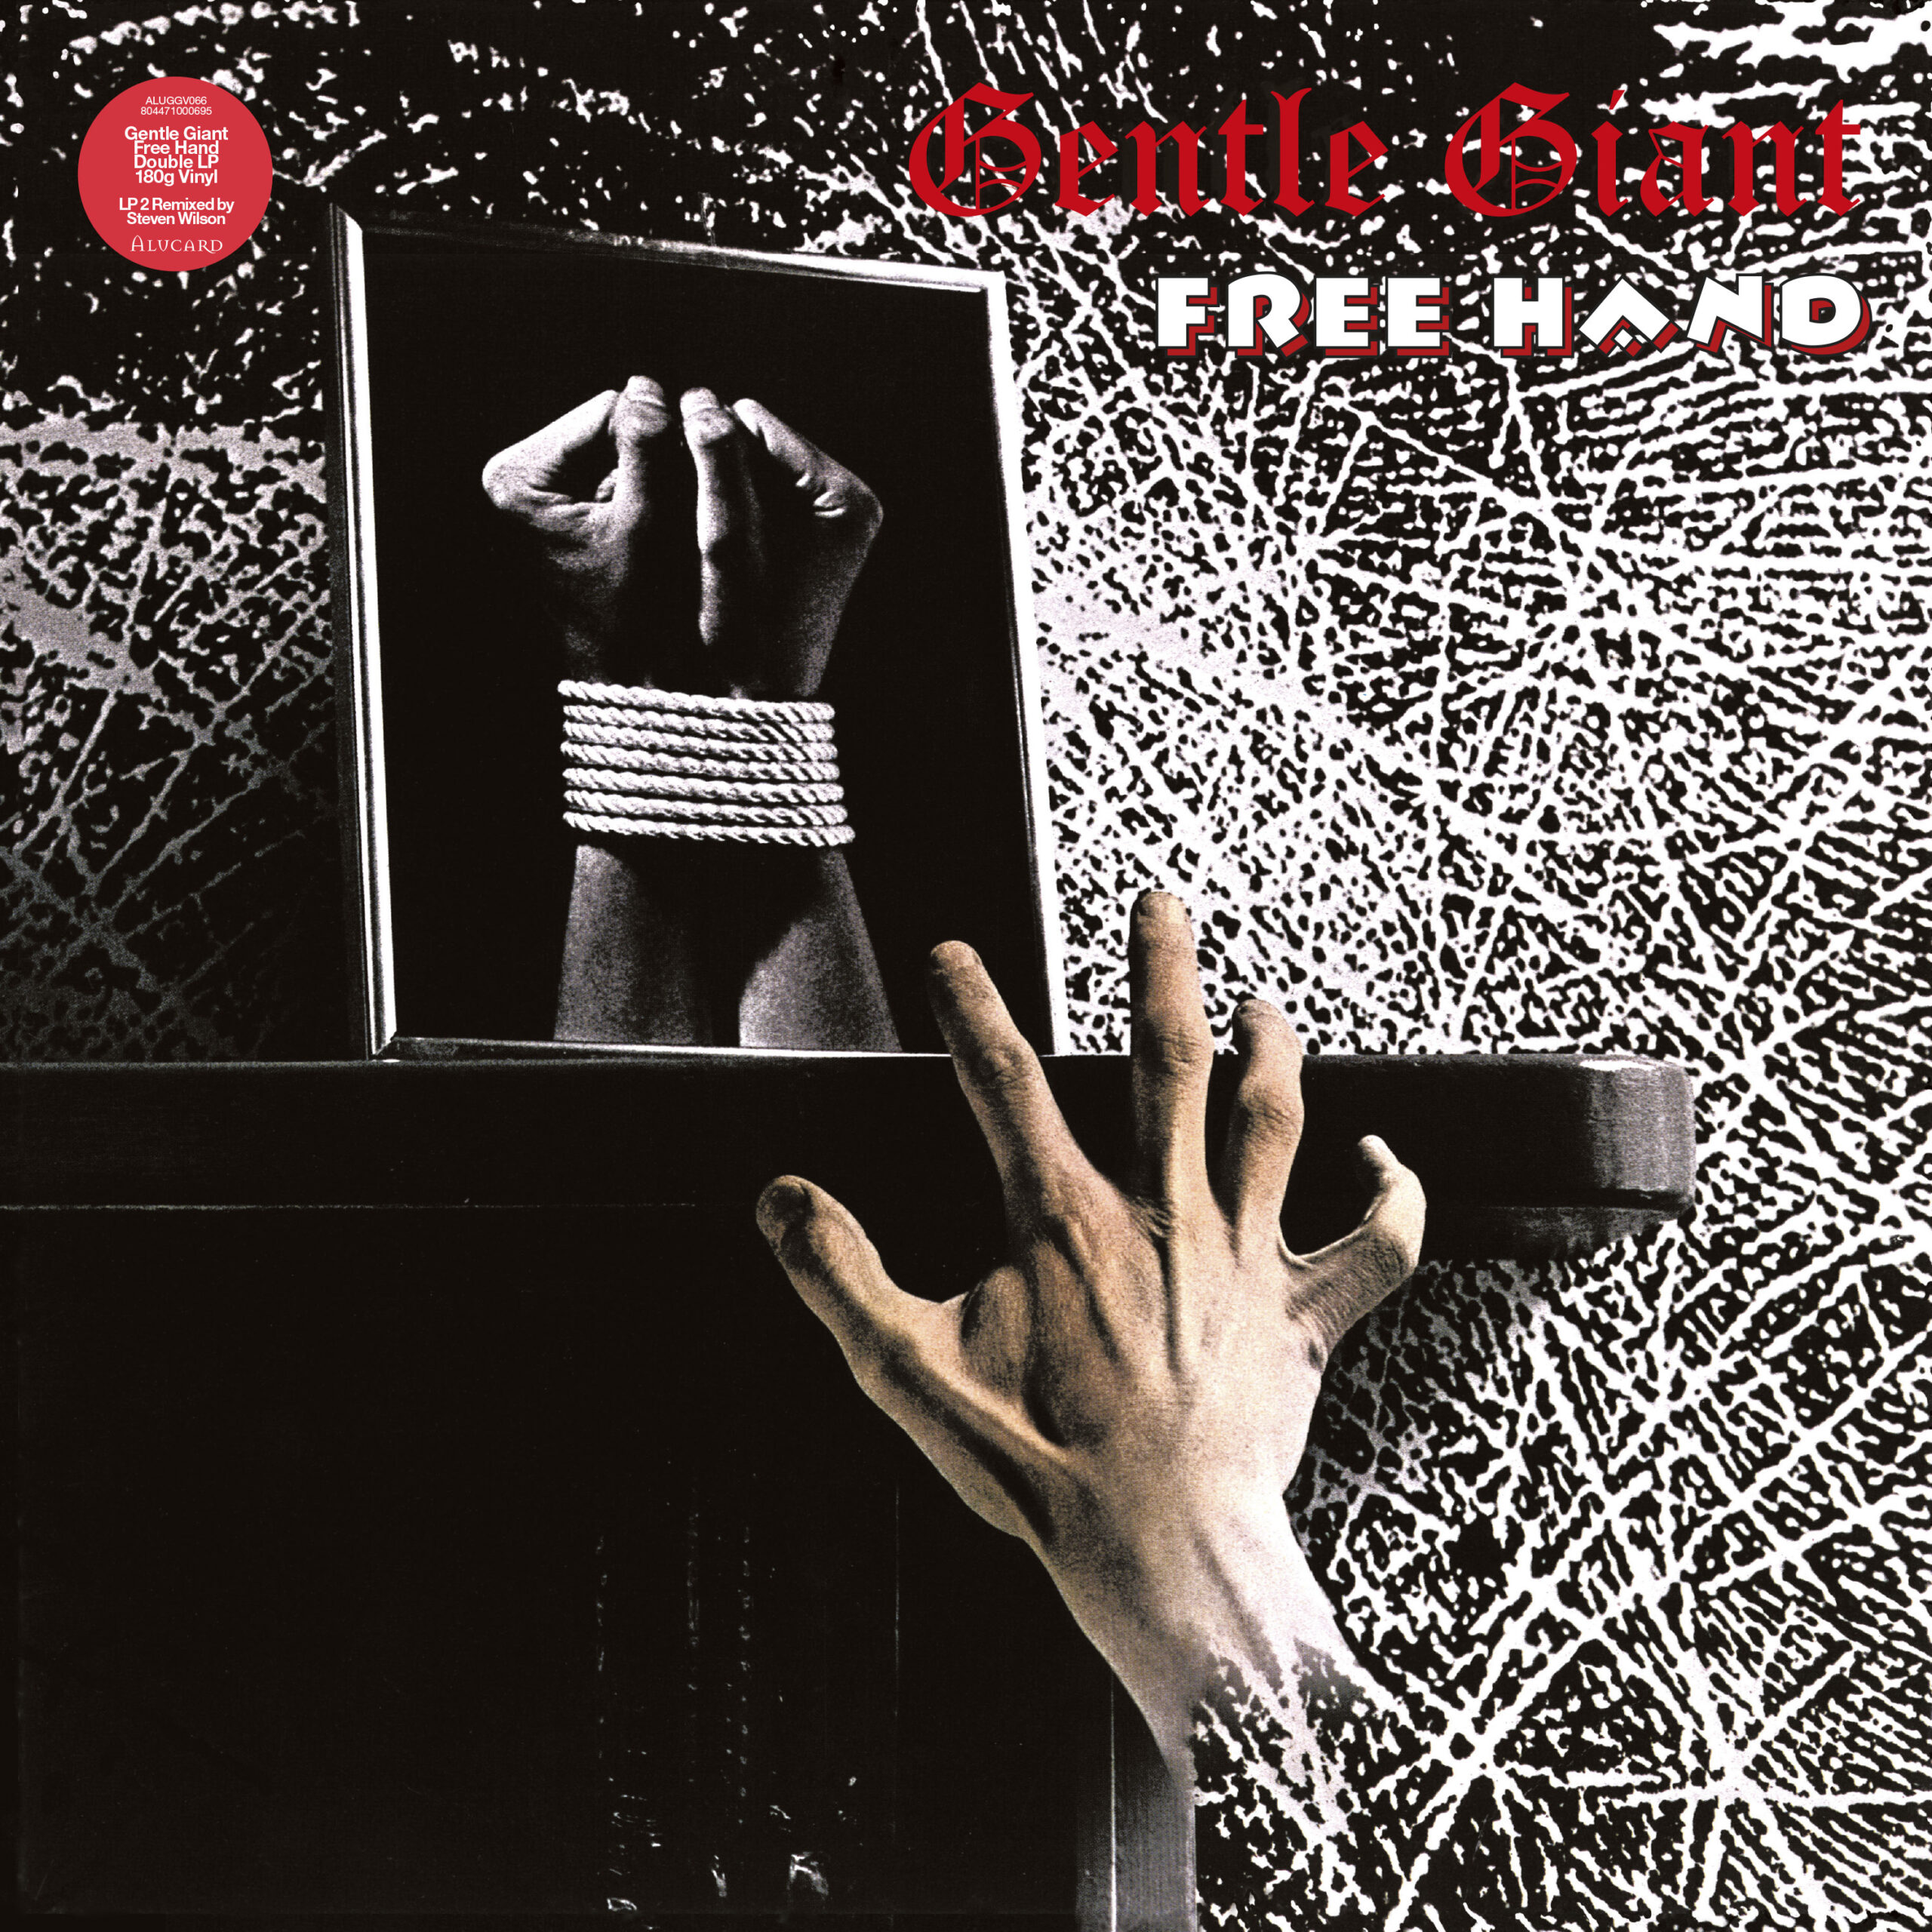 Gentle Giant (GB) – Free Hand